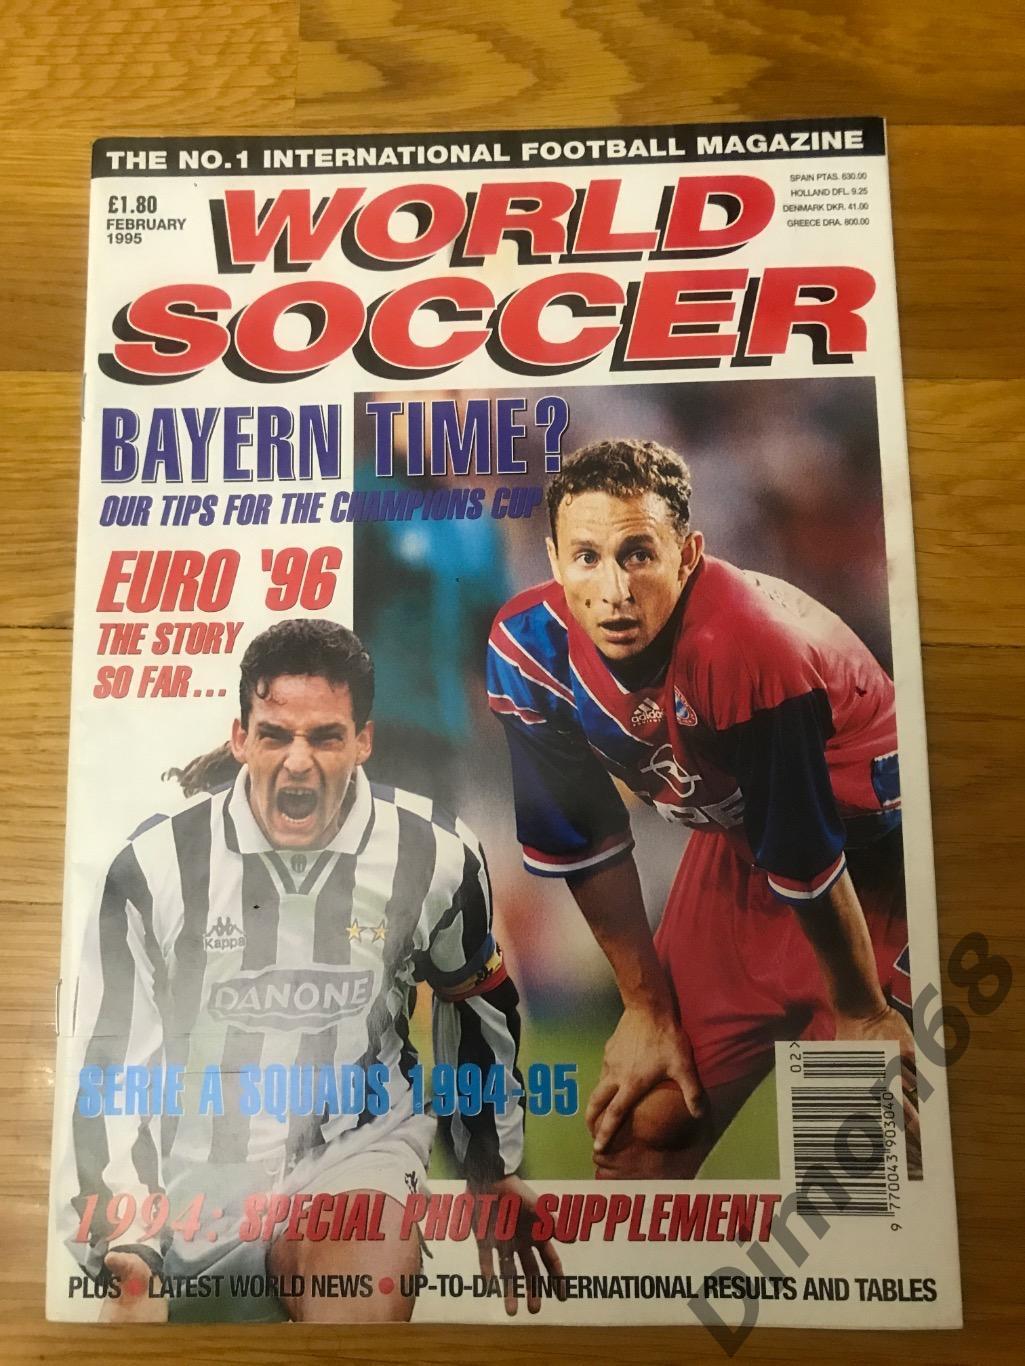 World soccer февраль 1995г не целый нет 6 листов